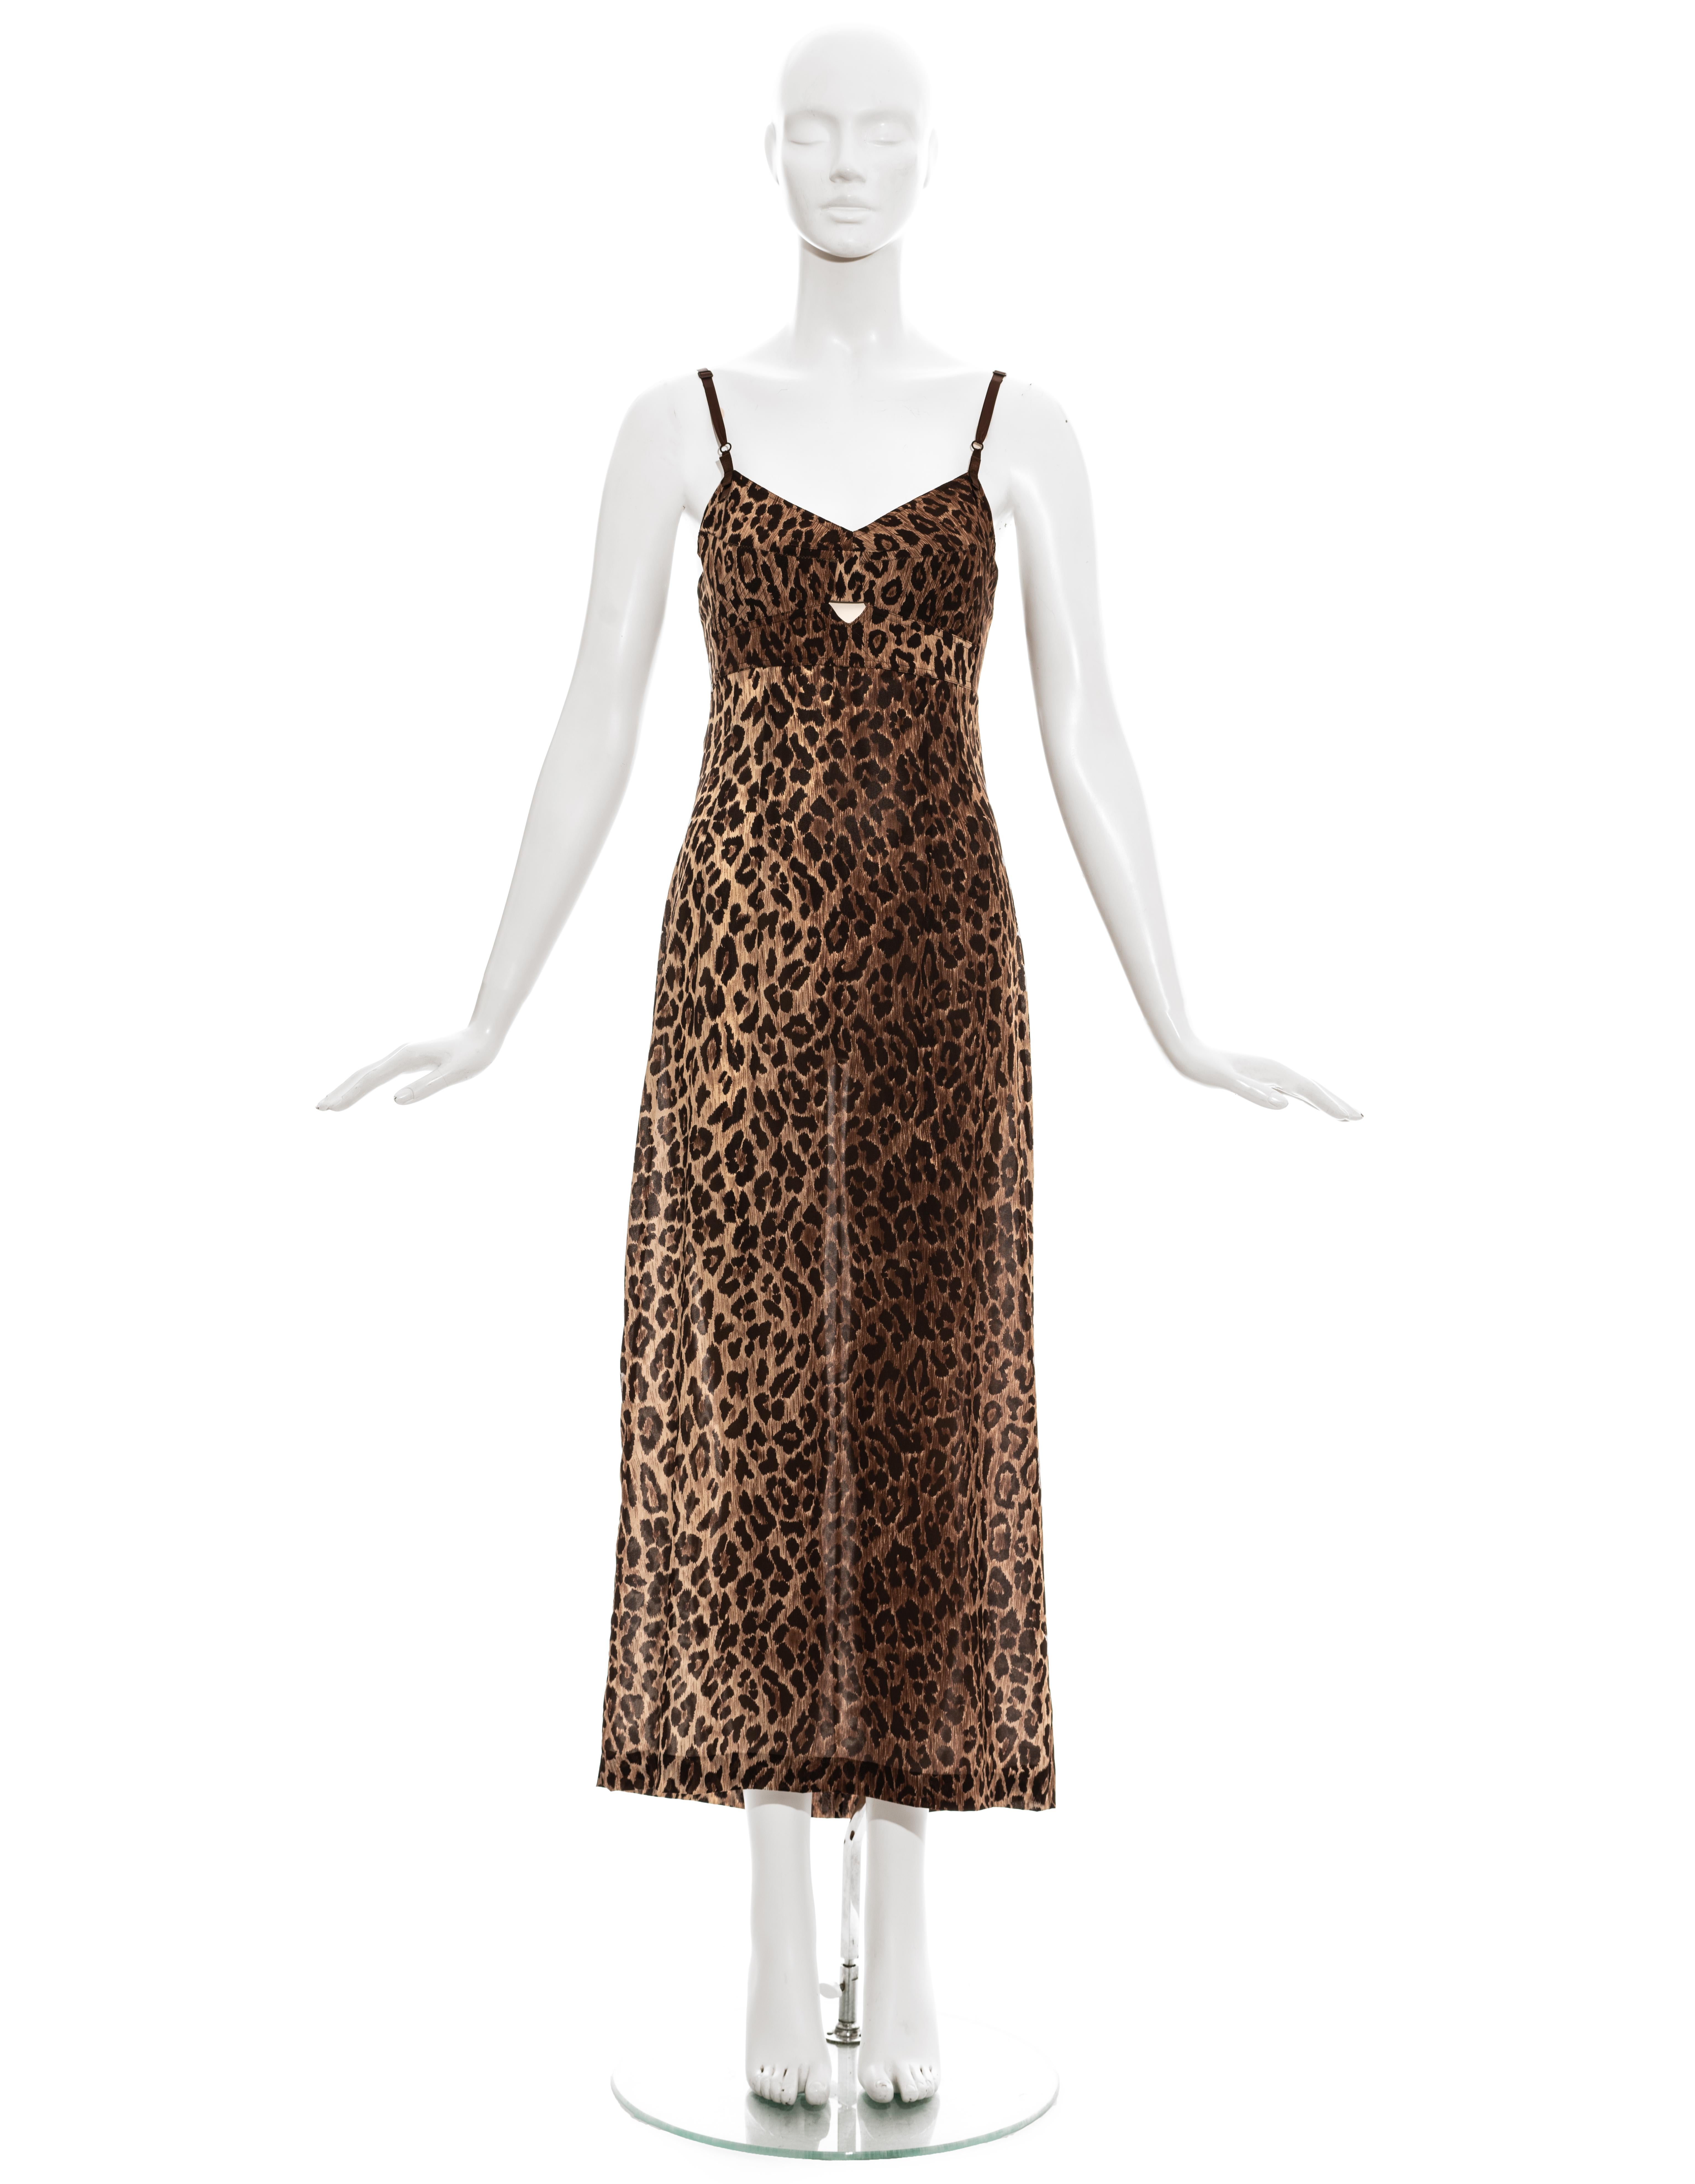 Dolce & Gabbana leopard print silk chiffon evening slip dress adjustable shoulder straps and front cut-out. 

Spring-Summer 1997